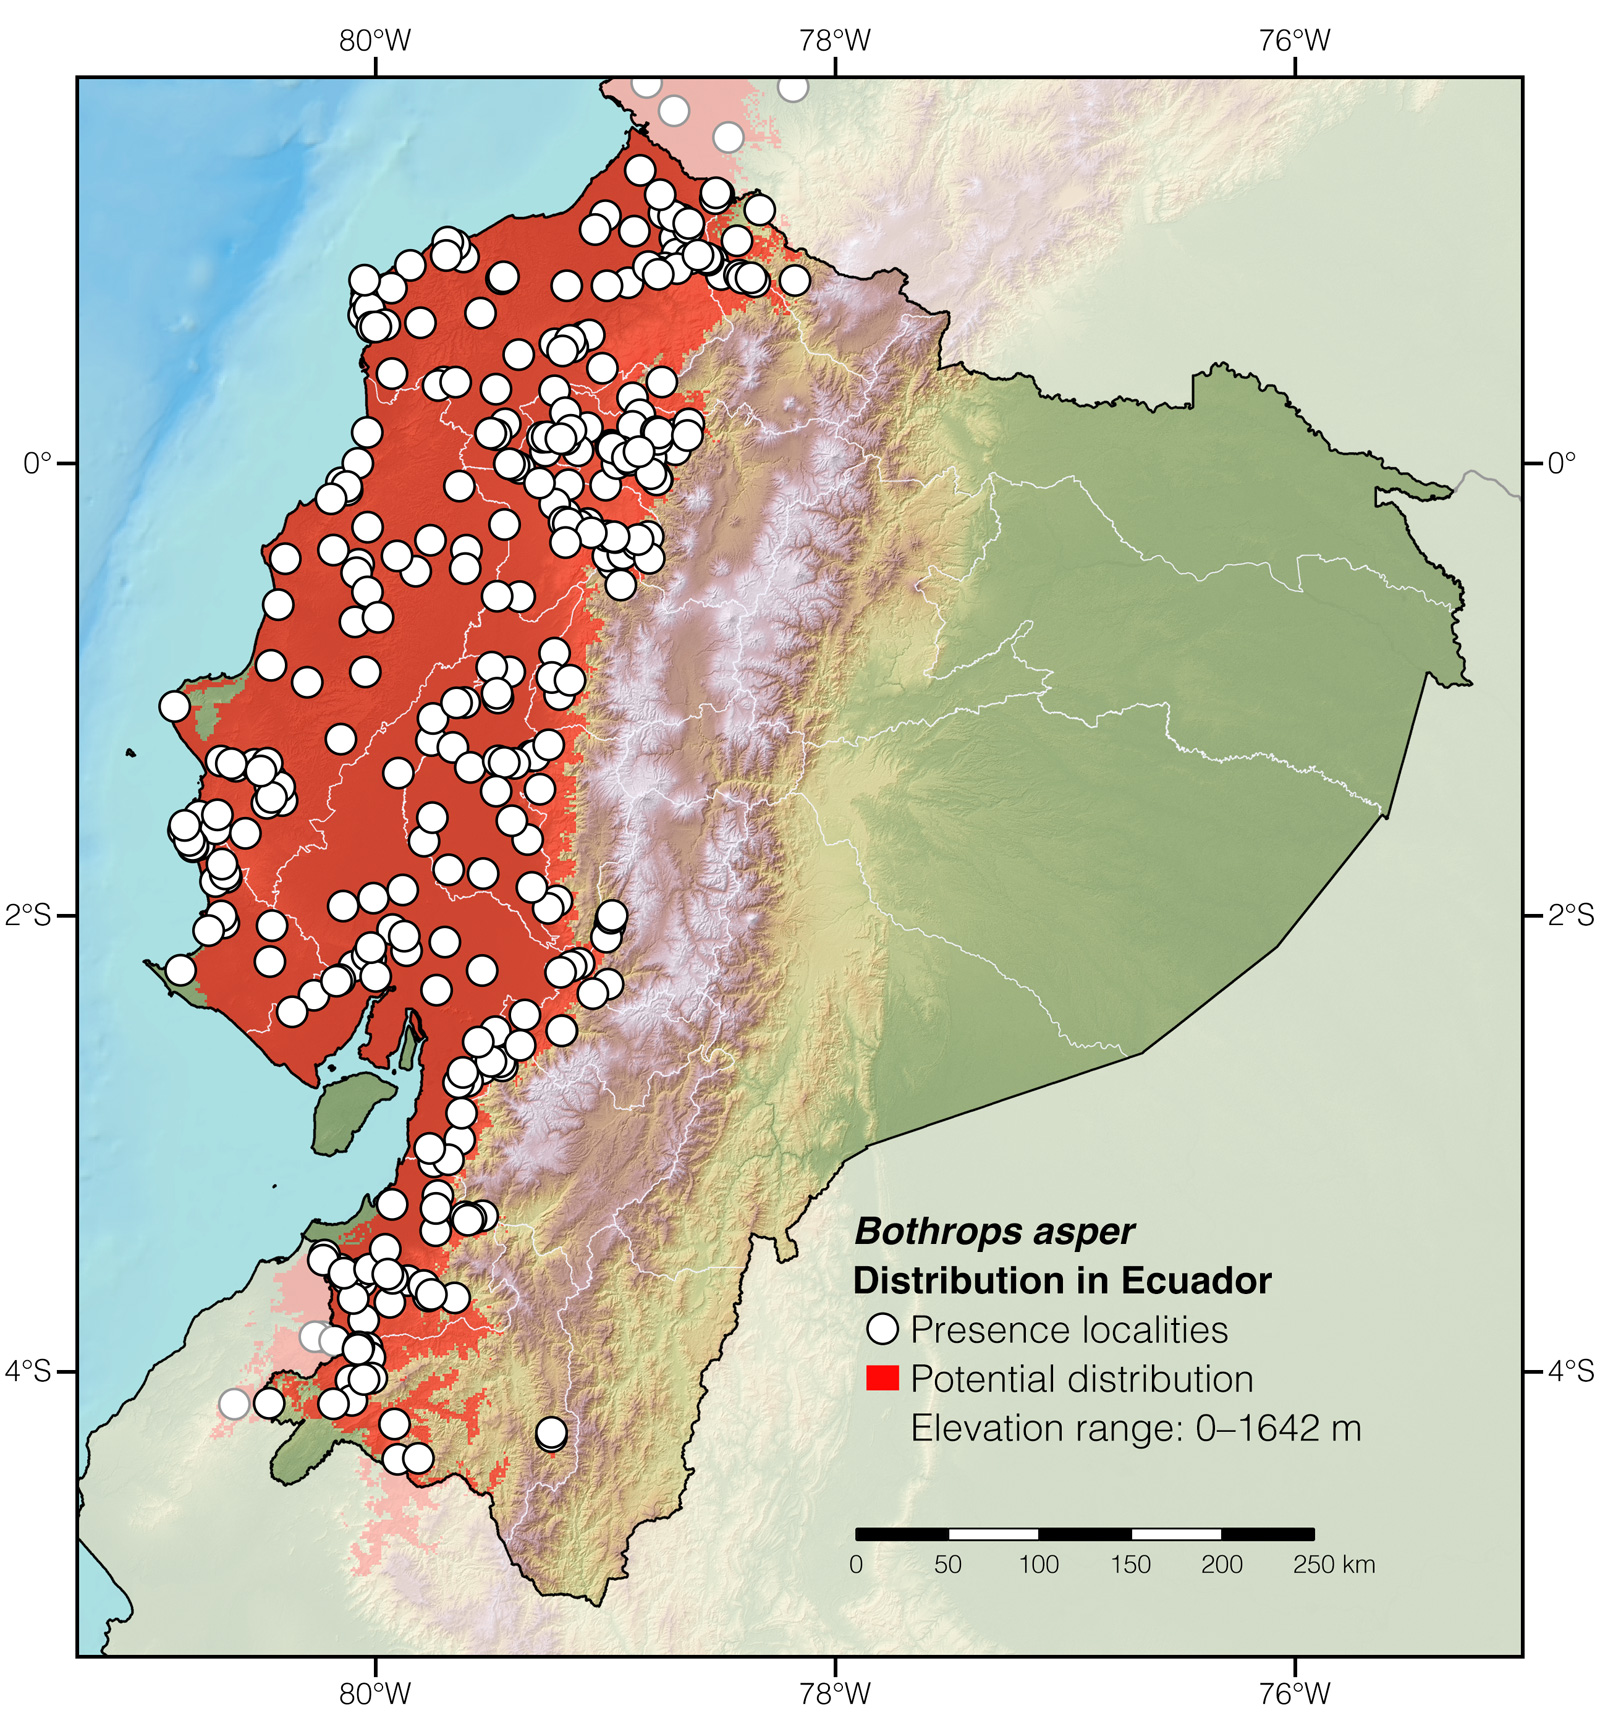 Distribution of Bothrops asper in Ecuador